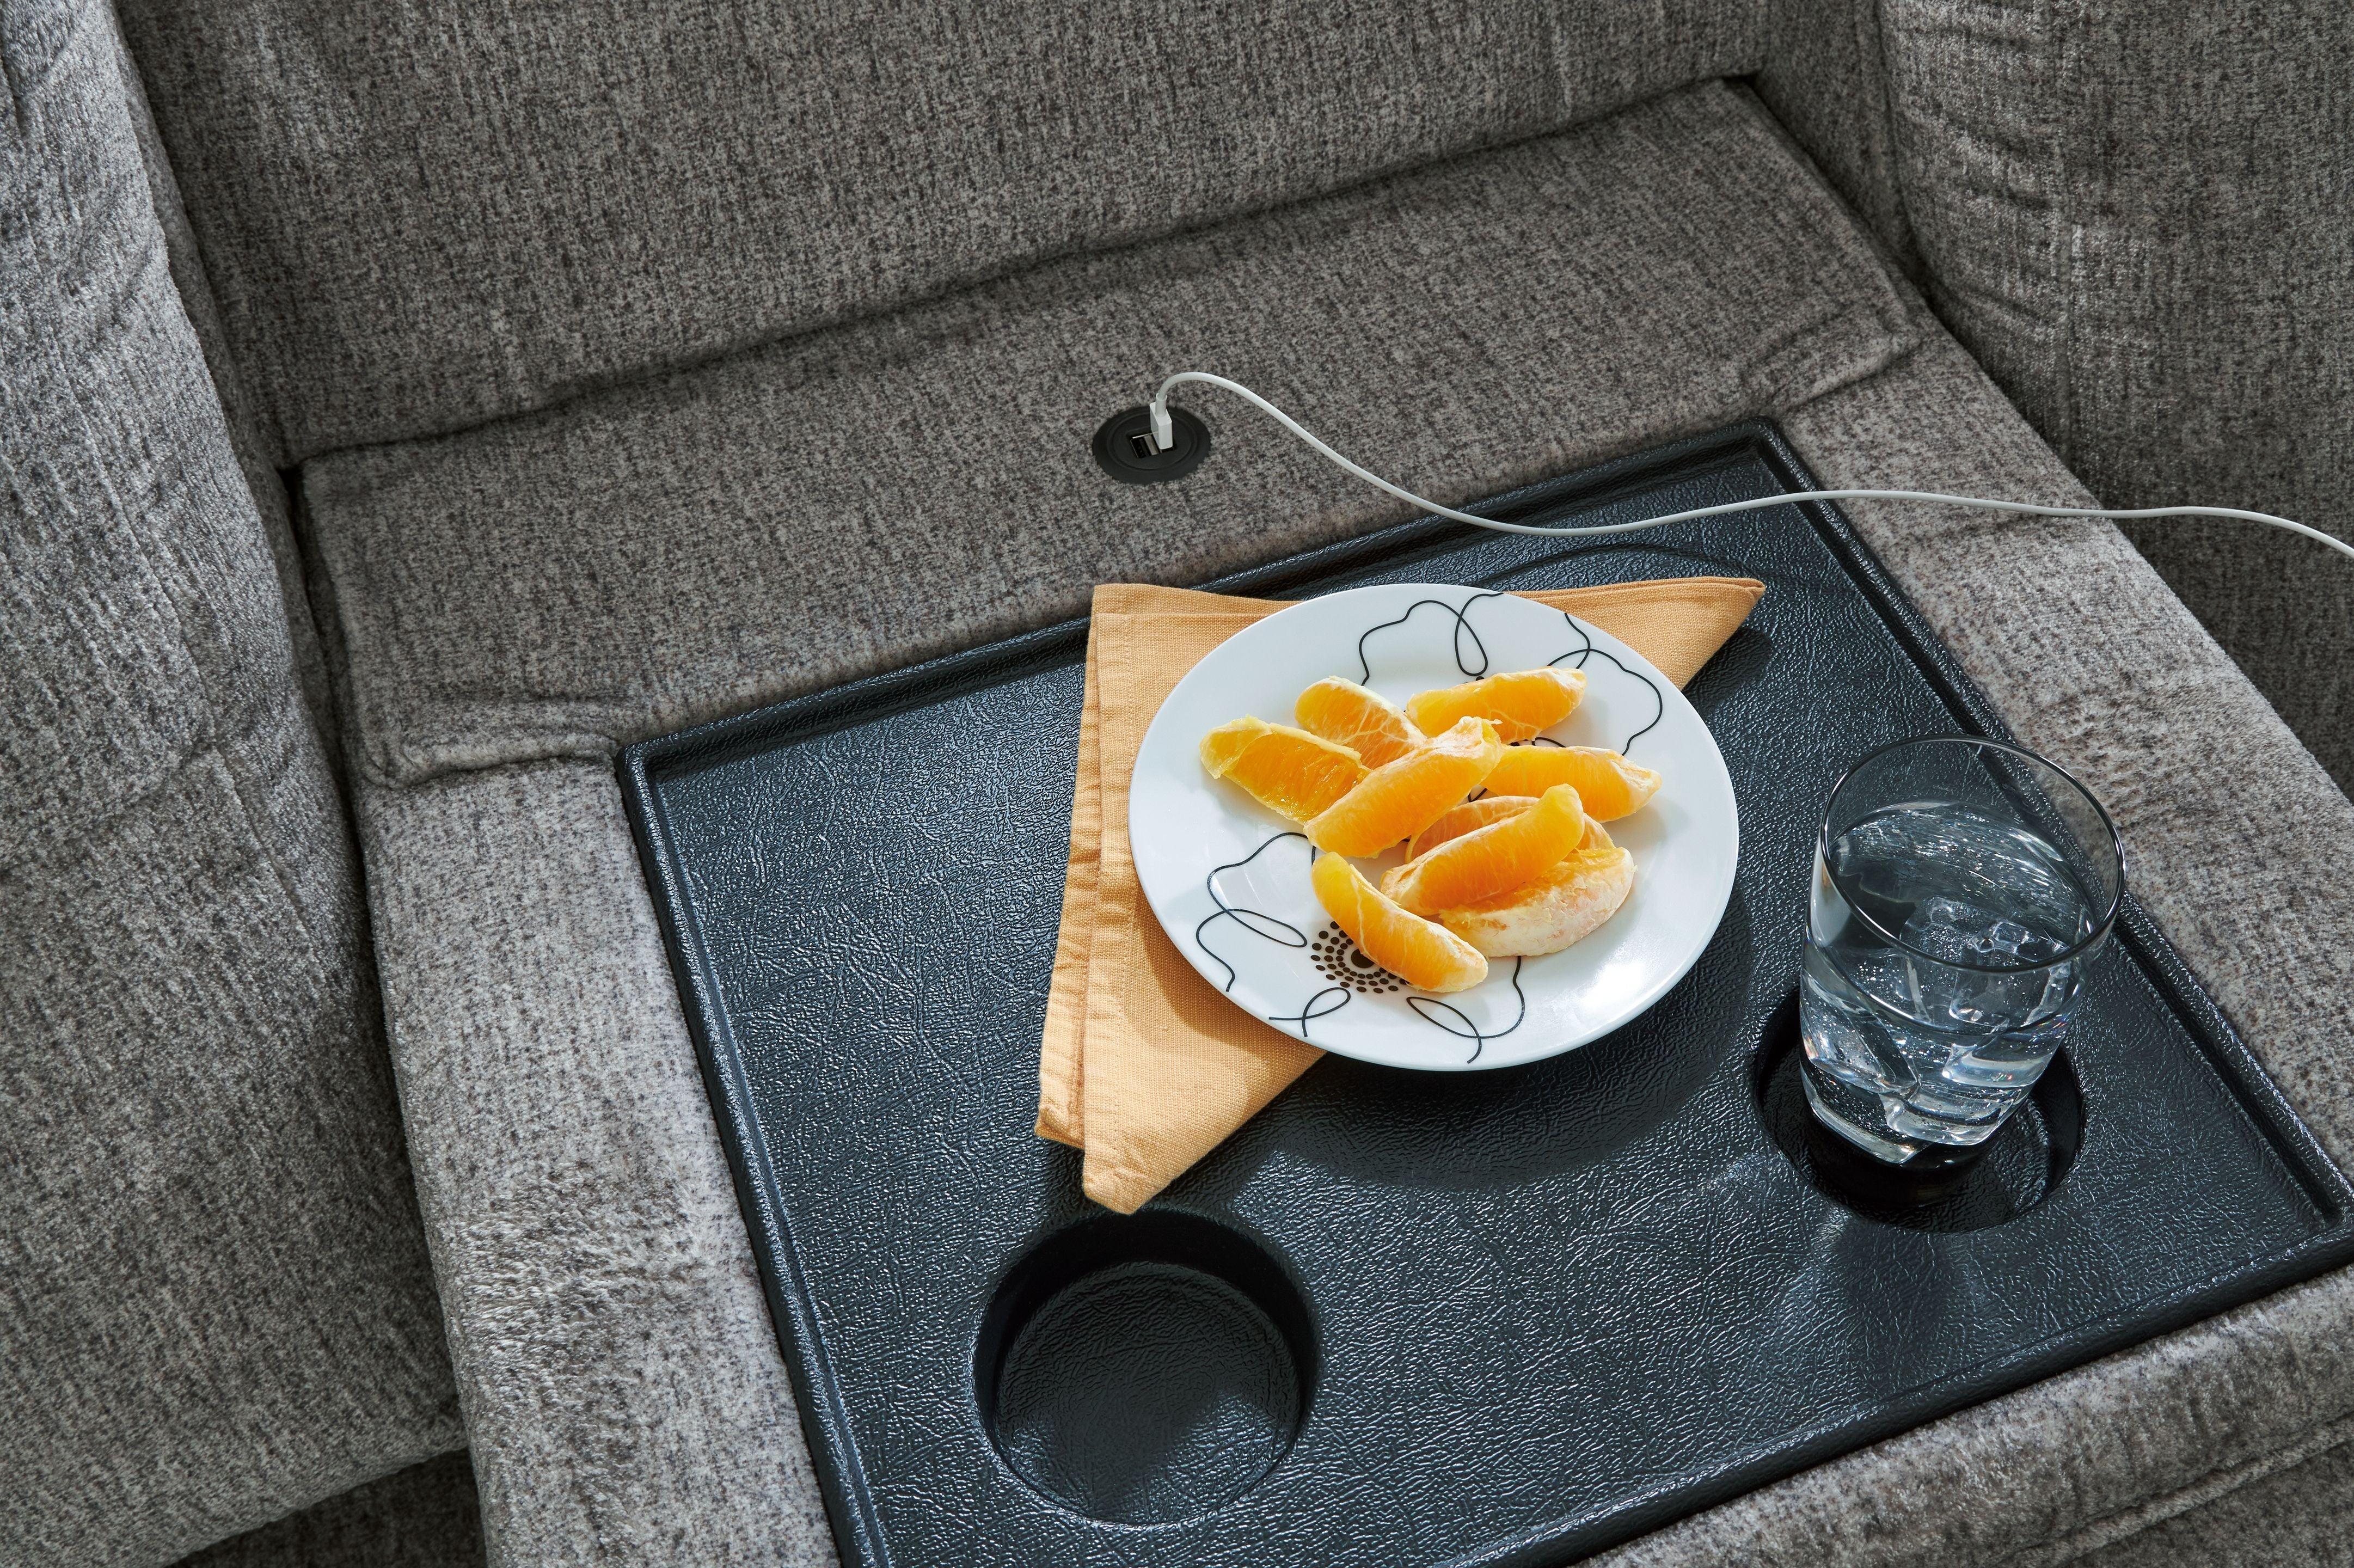 Signature Design by Ashley® - Bindura - Living Room Set - 5th Avenue Furniture